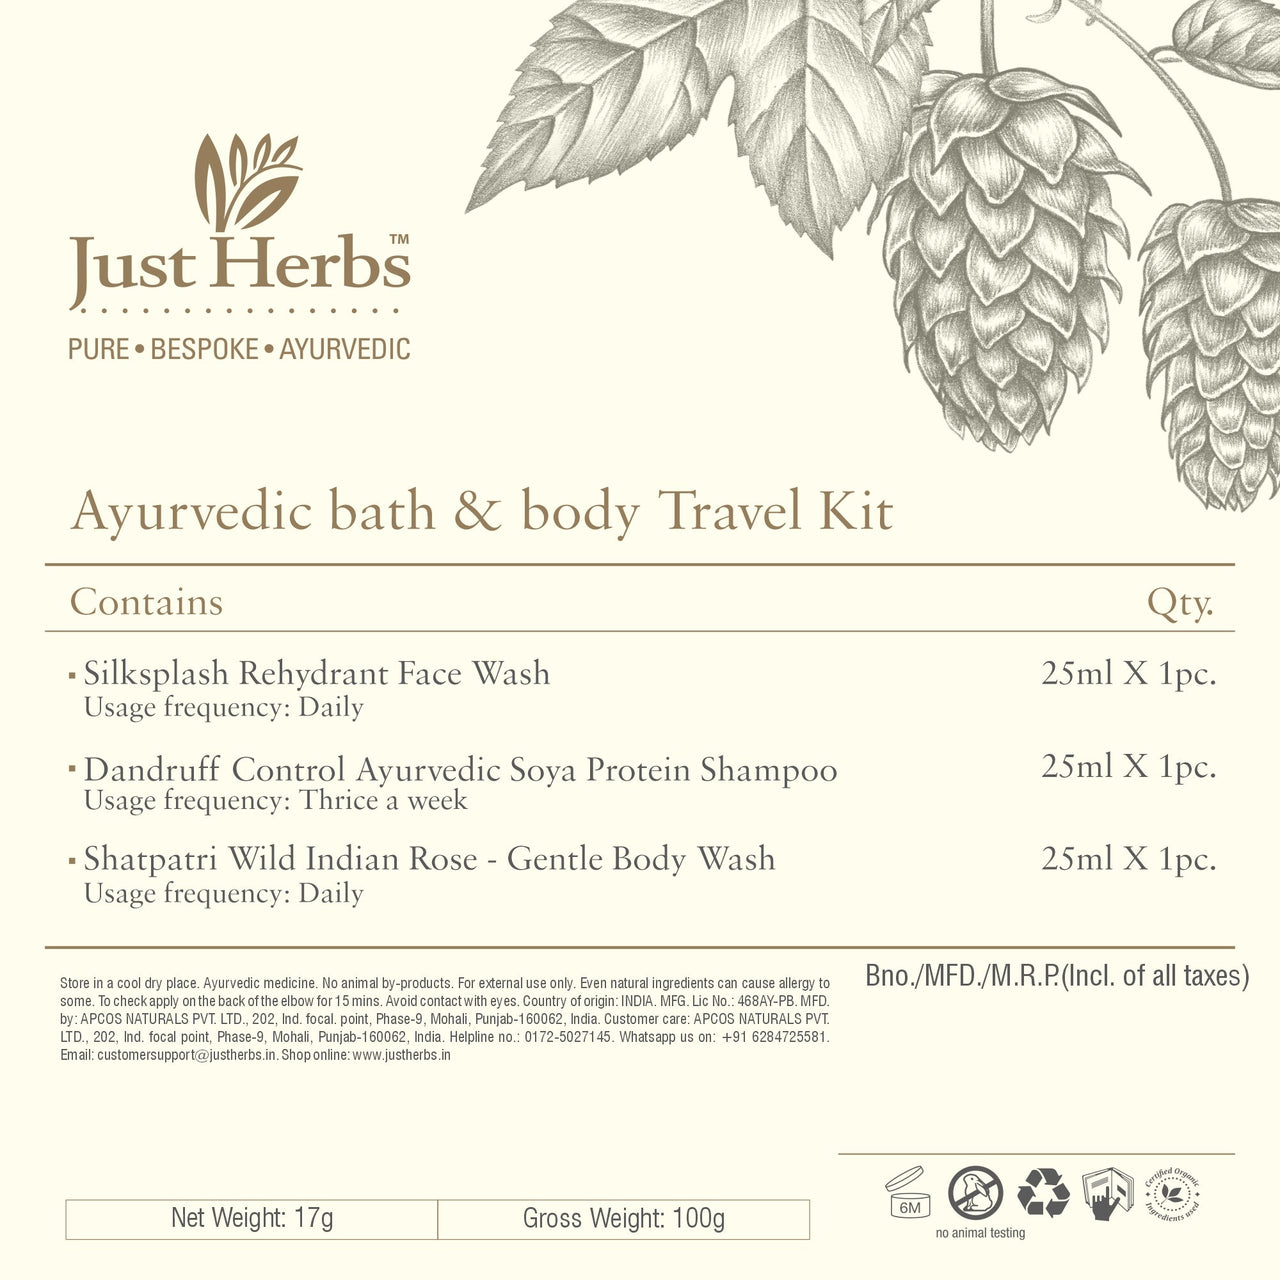 Just Herbs Ayurvedic Bath & Body Travel Kit